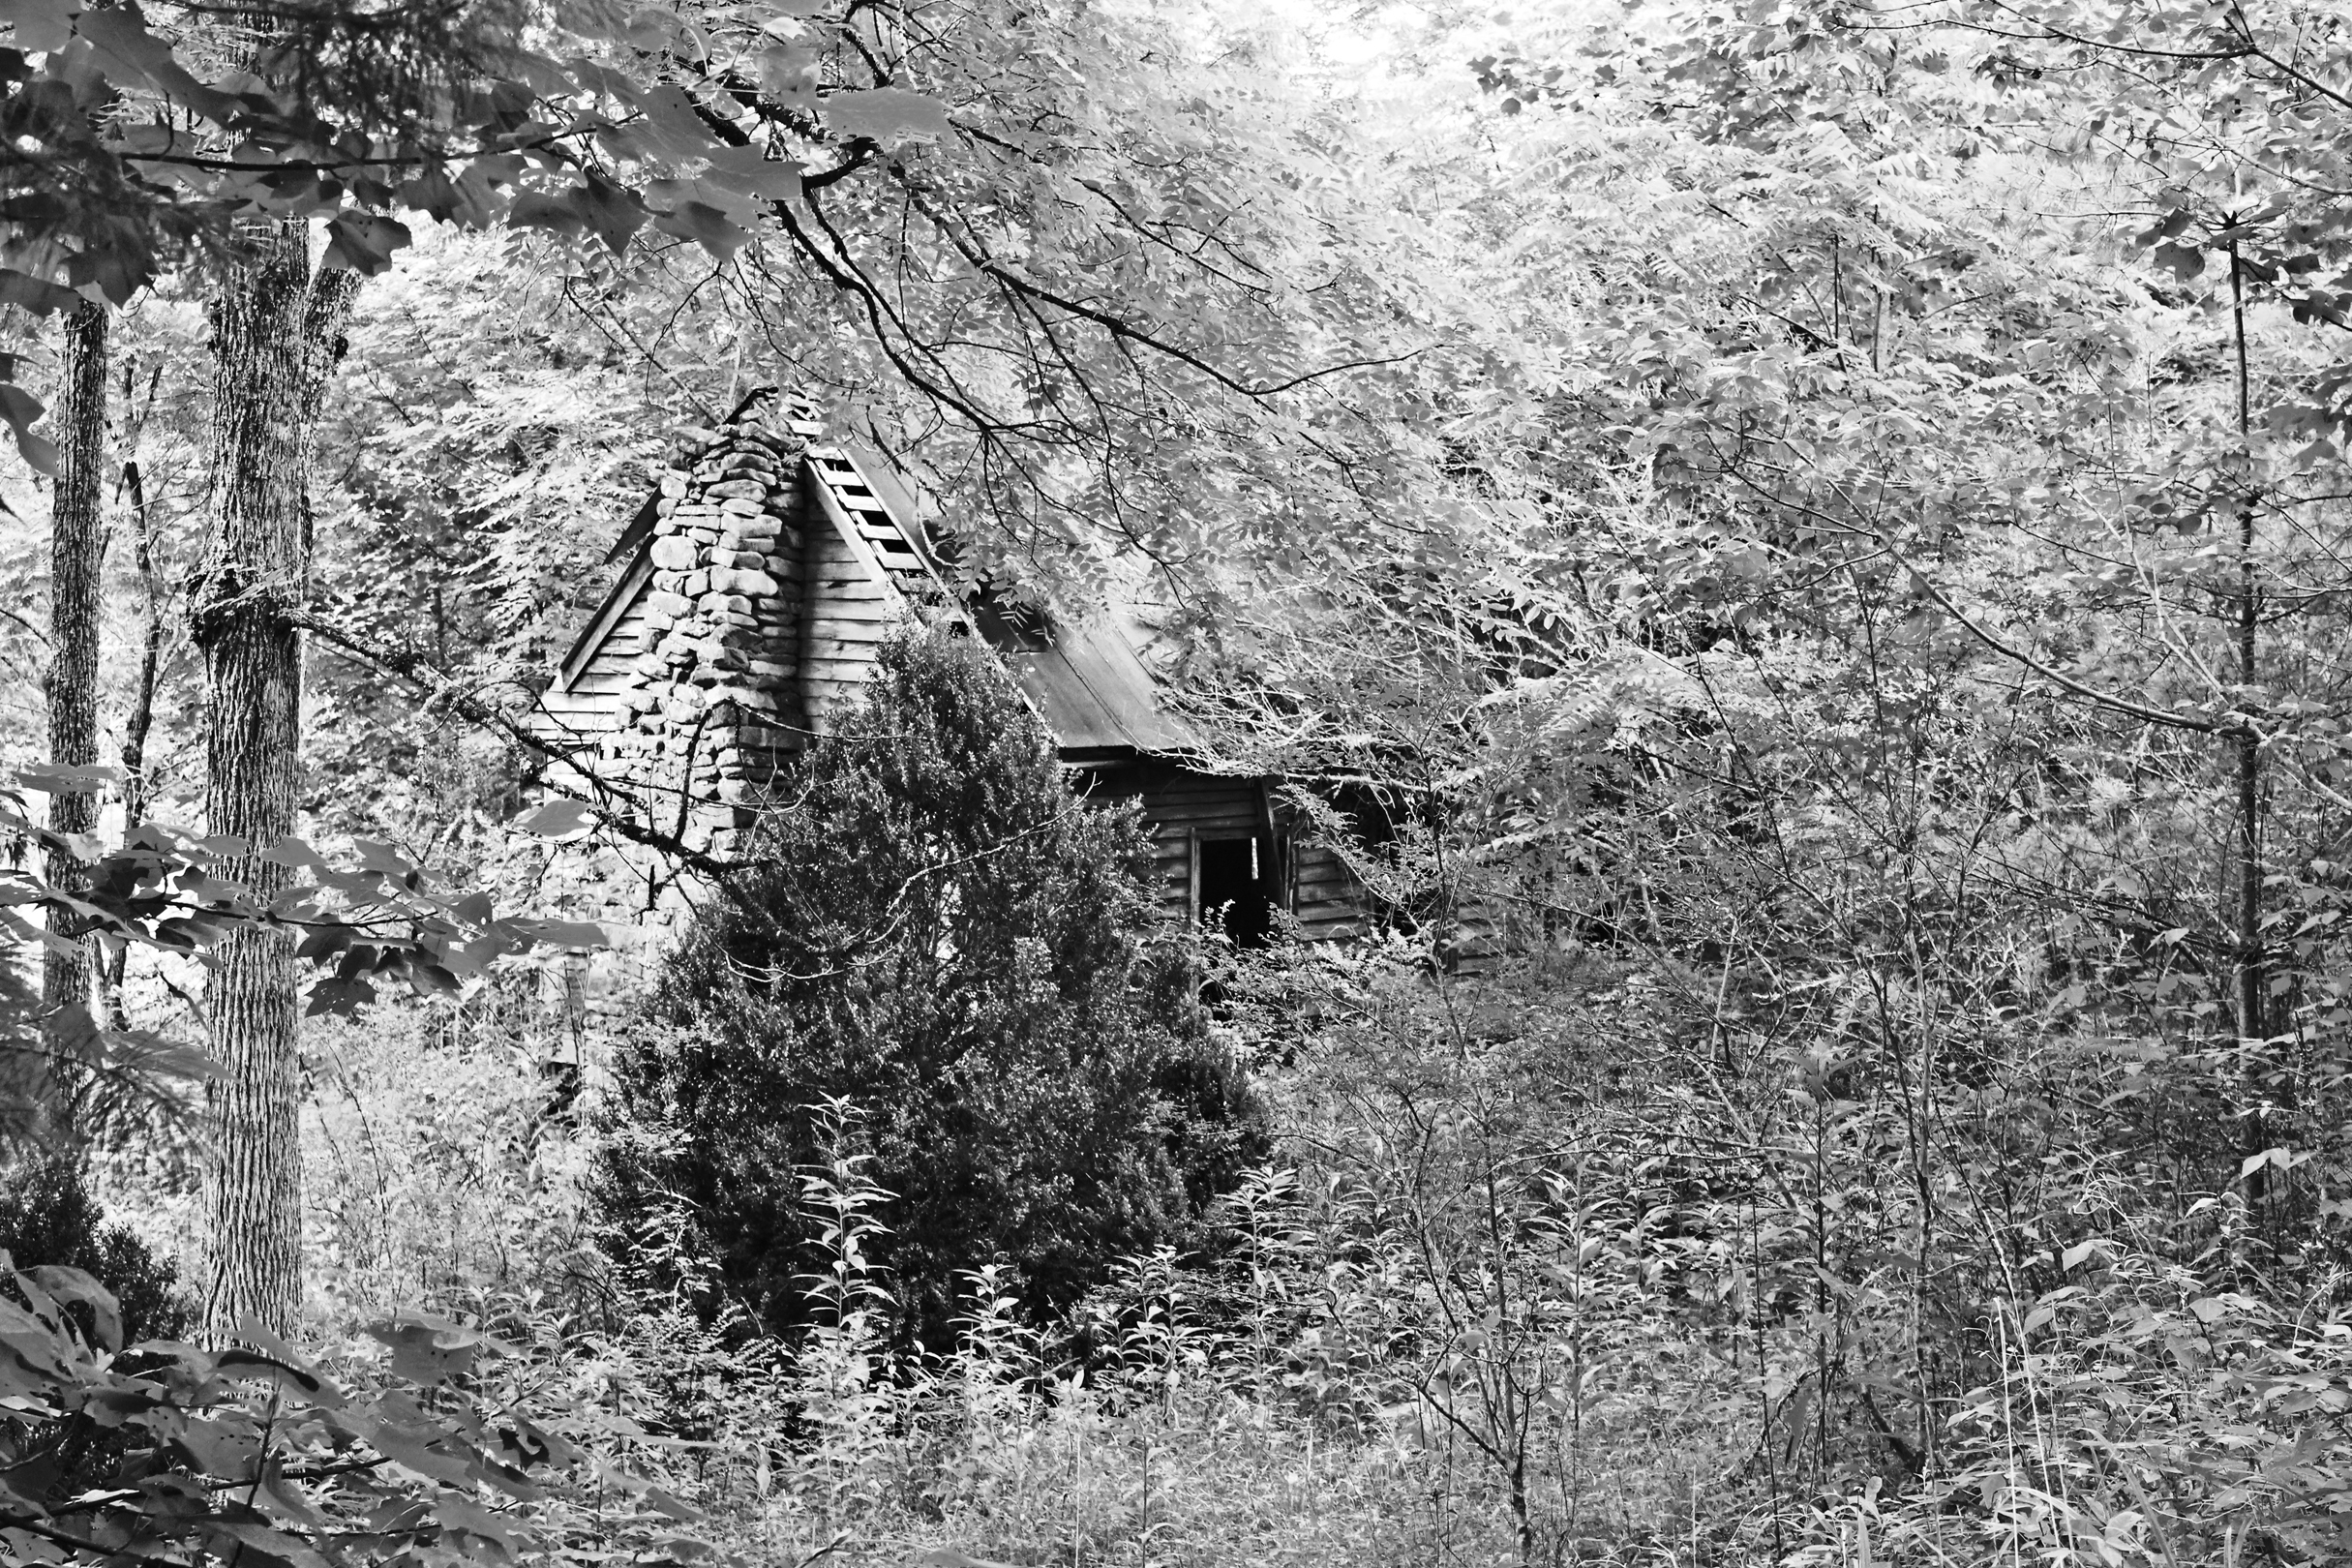    Cabin in the Woods  , North Georgia, 2014. B&amp;W HDR digital image. 